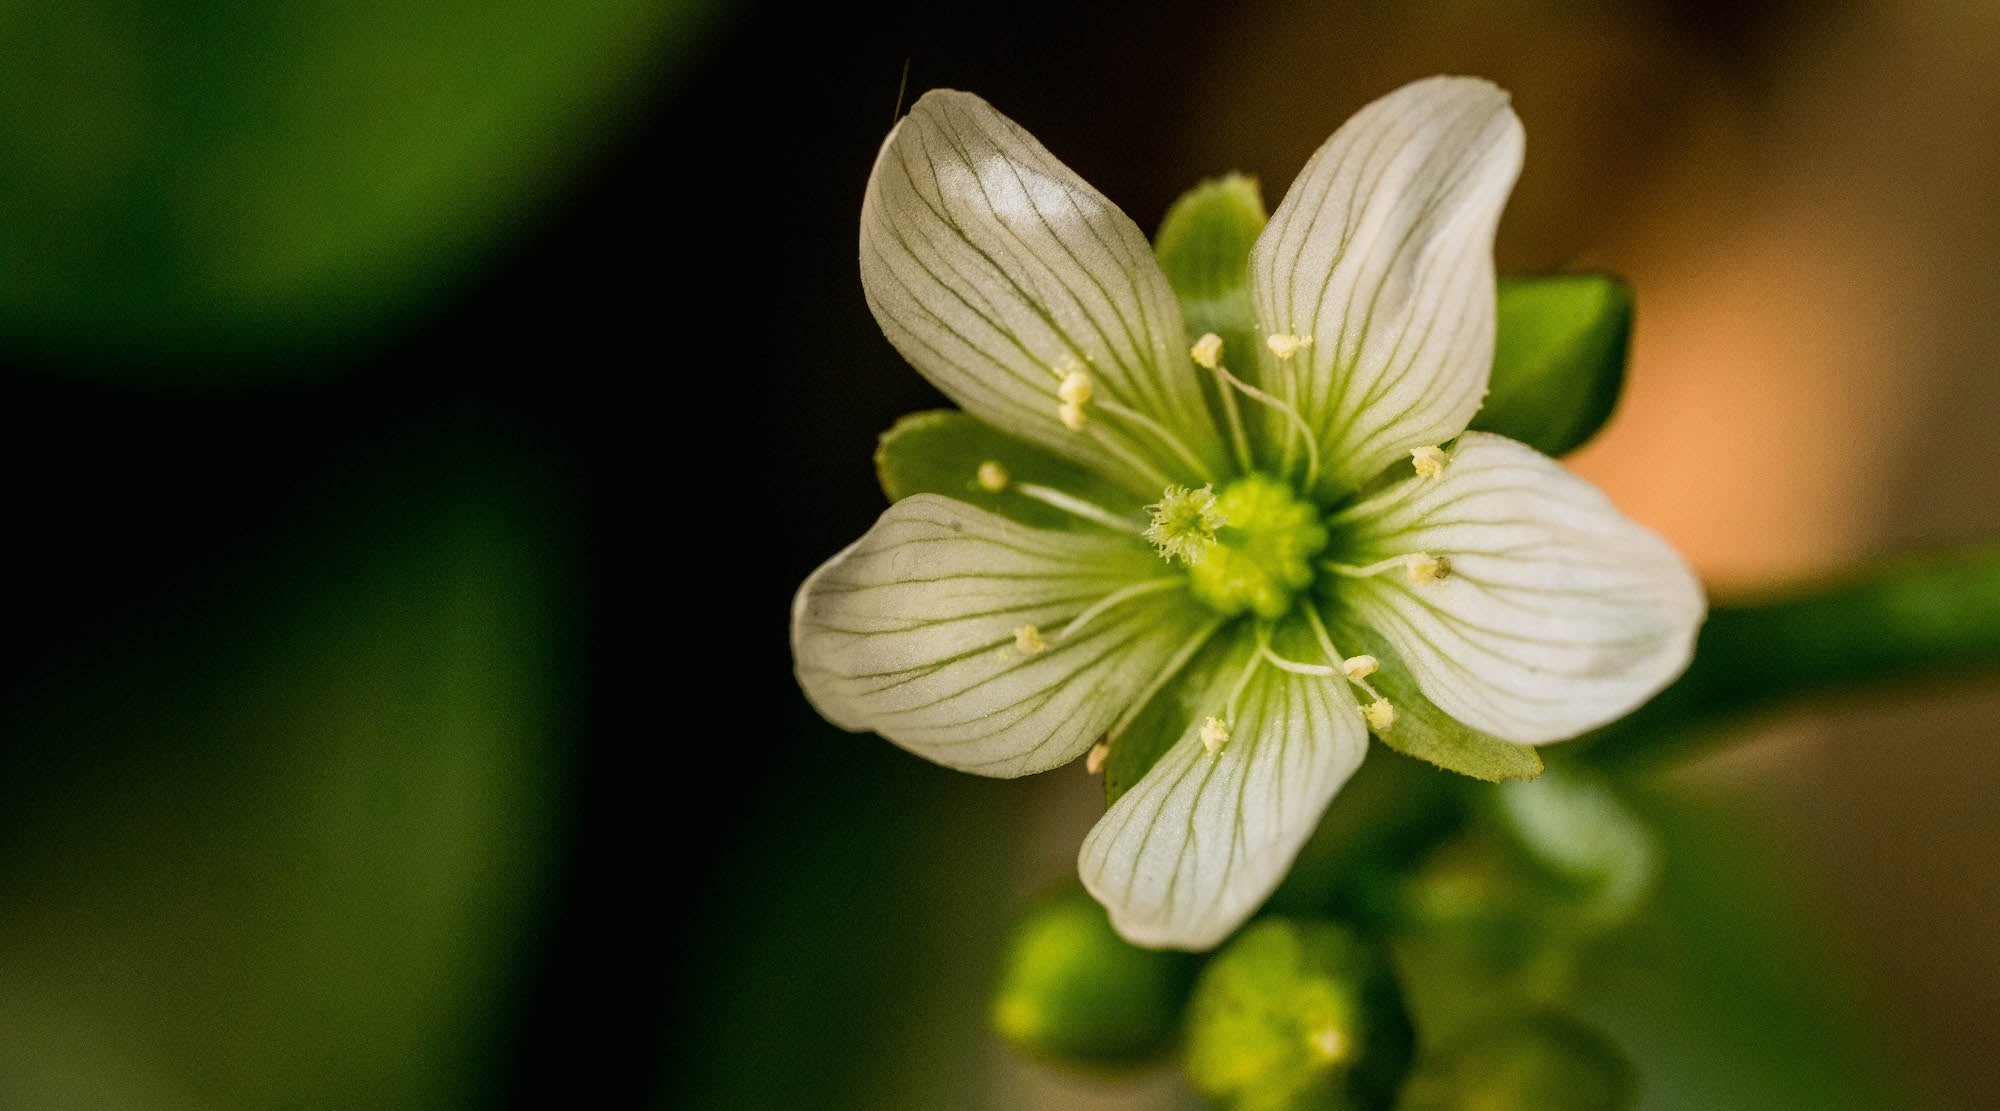 venus flytrap flower essence